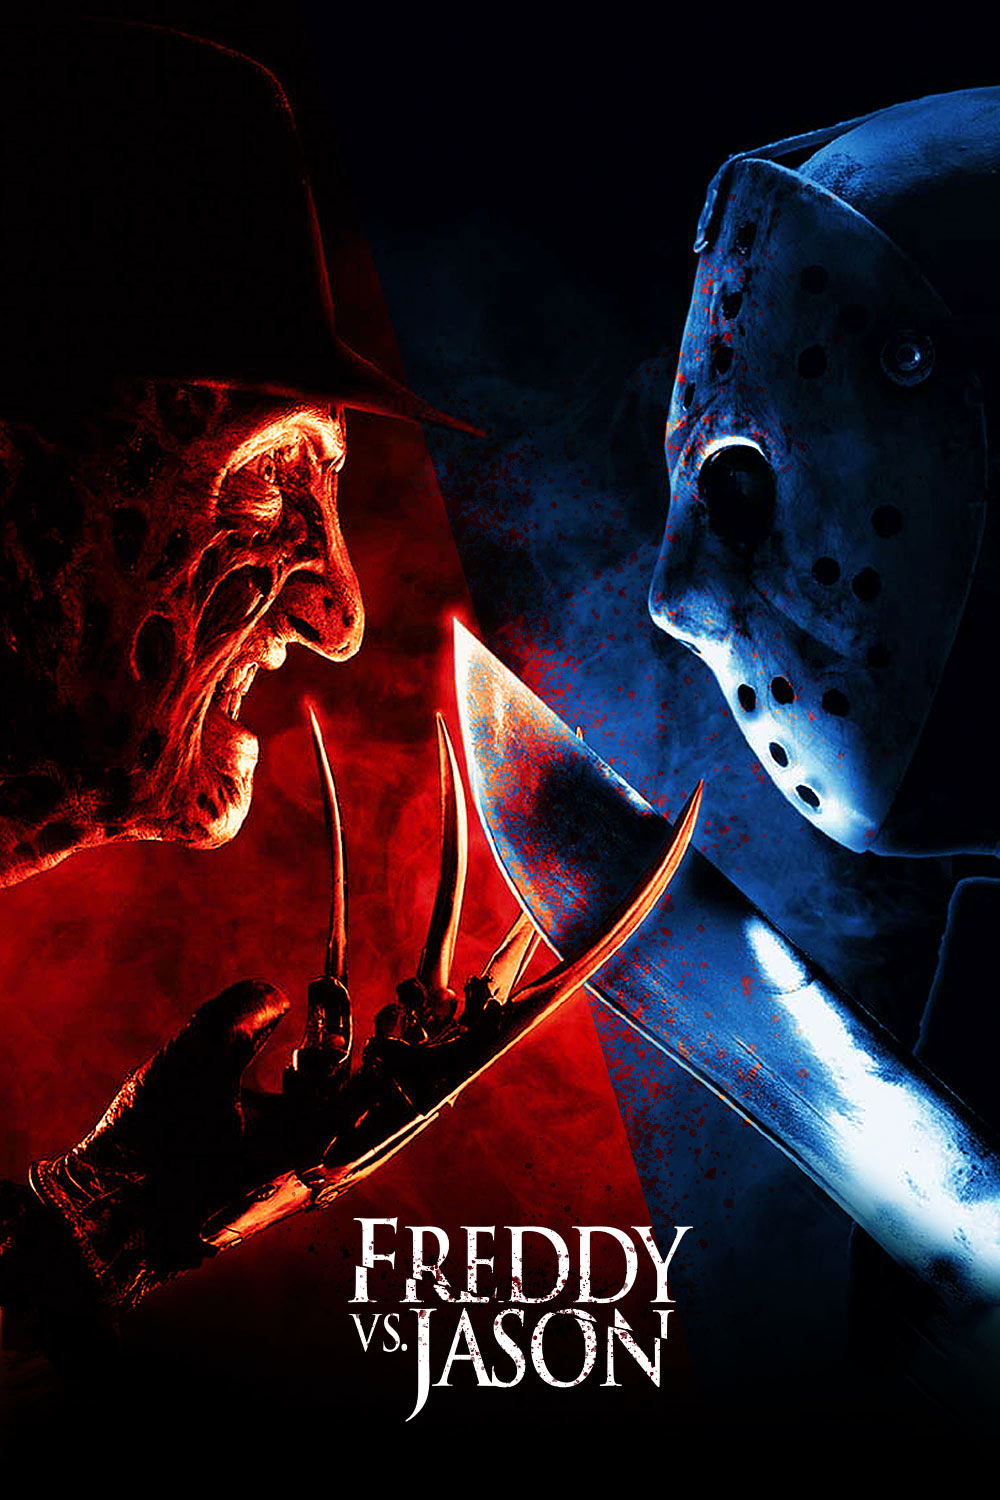 Freddy vs. Jason (2003) poster